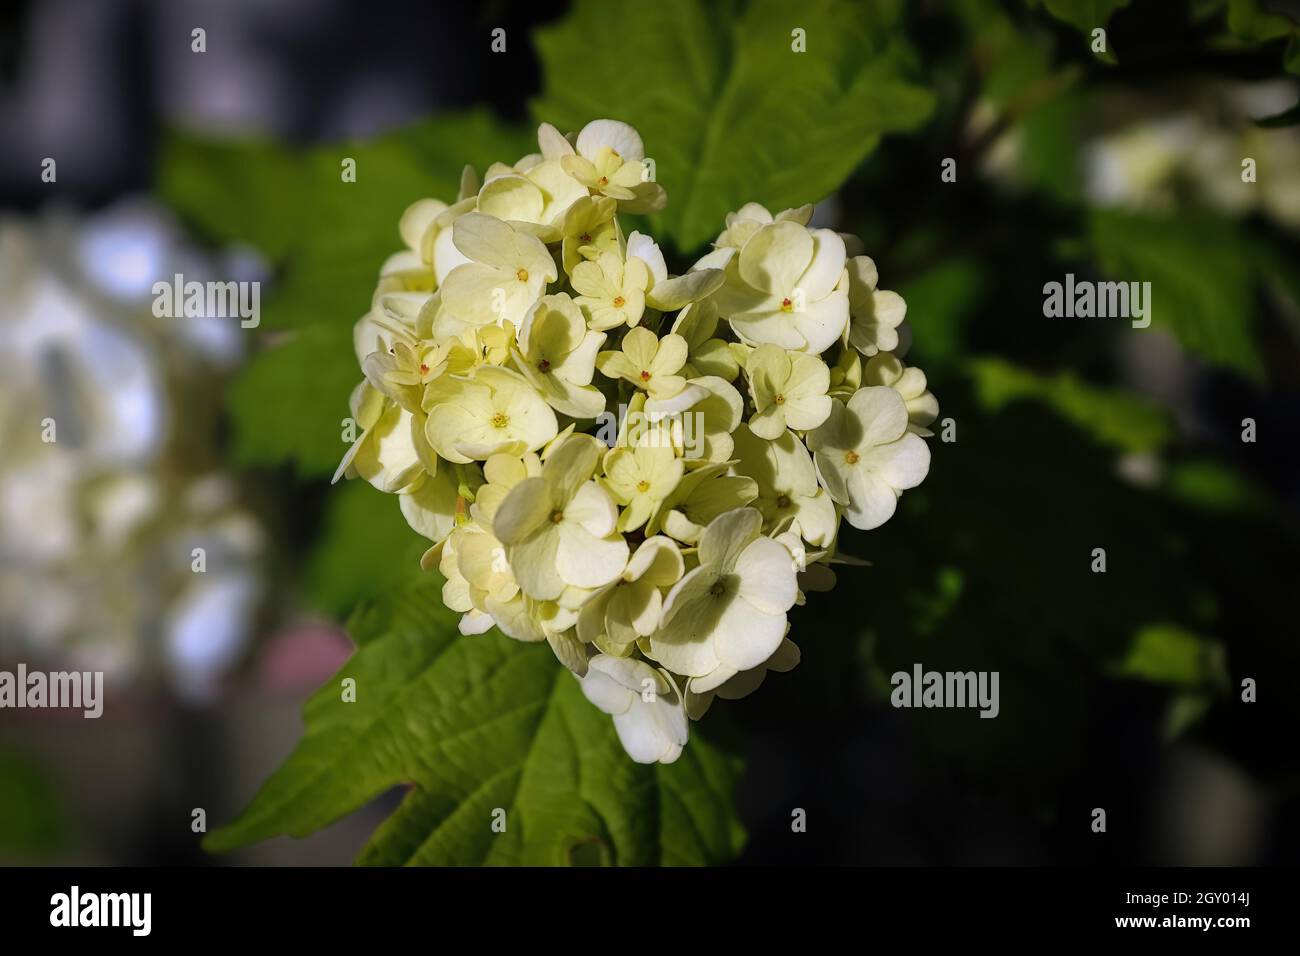 Closeup of flowers on a cranberry snowball shrub. Stock Photo